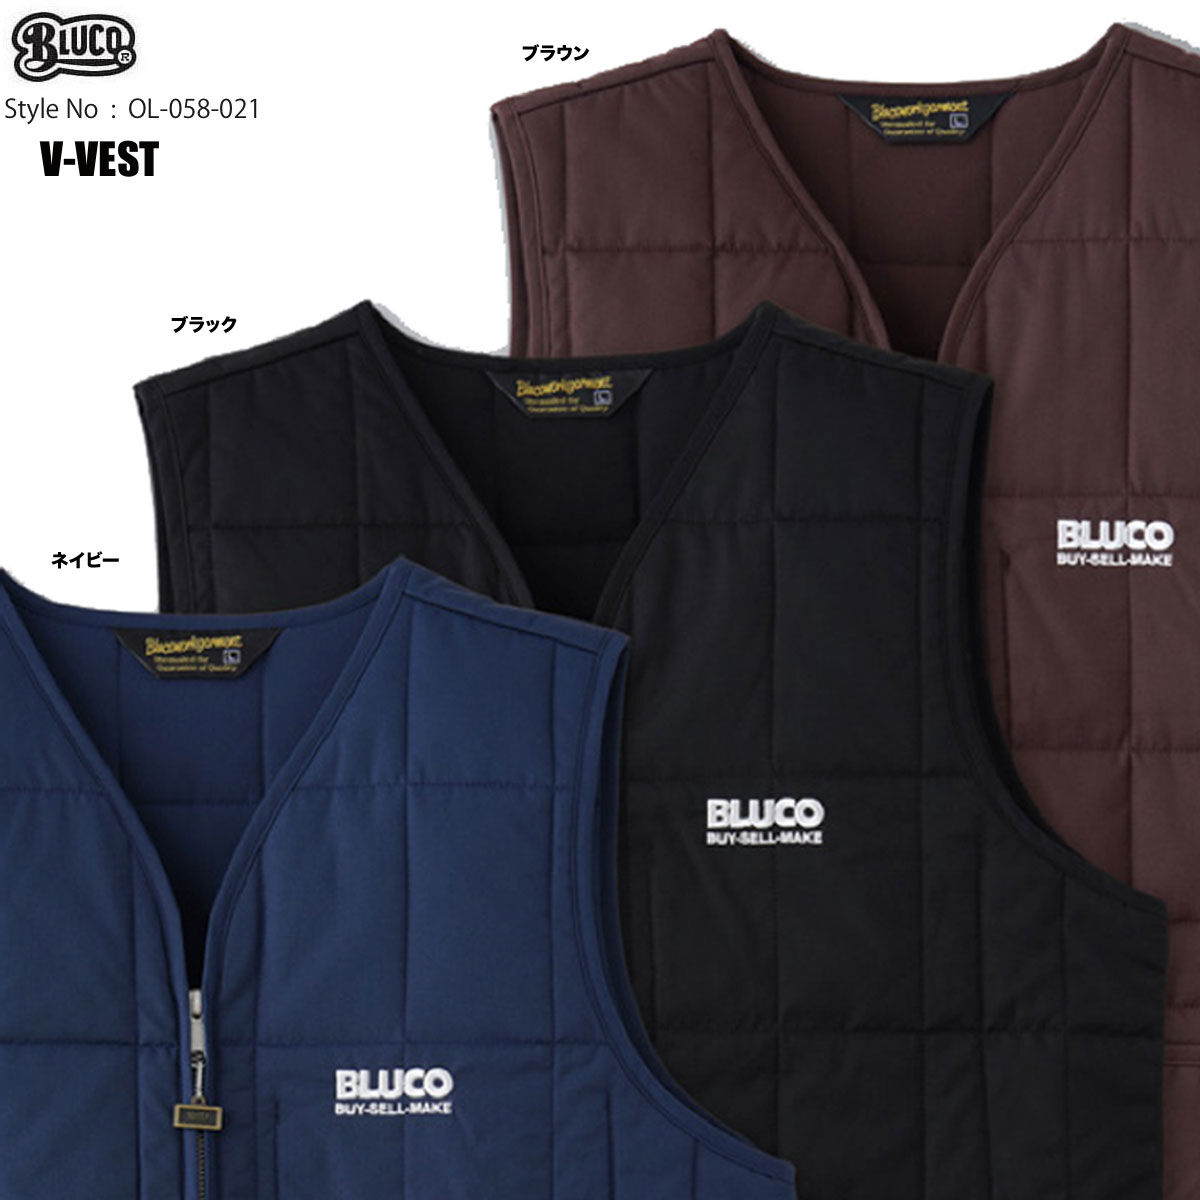 BLUCO(ブルコ) OL-058-021 V-VEST 3色(ブラック・ブラウン